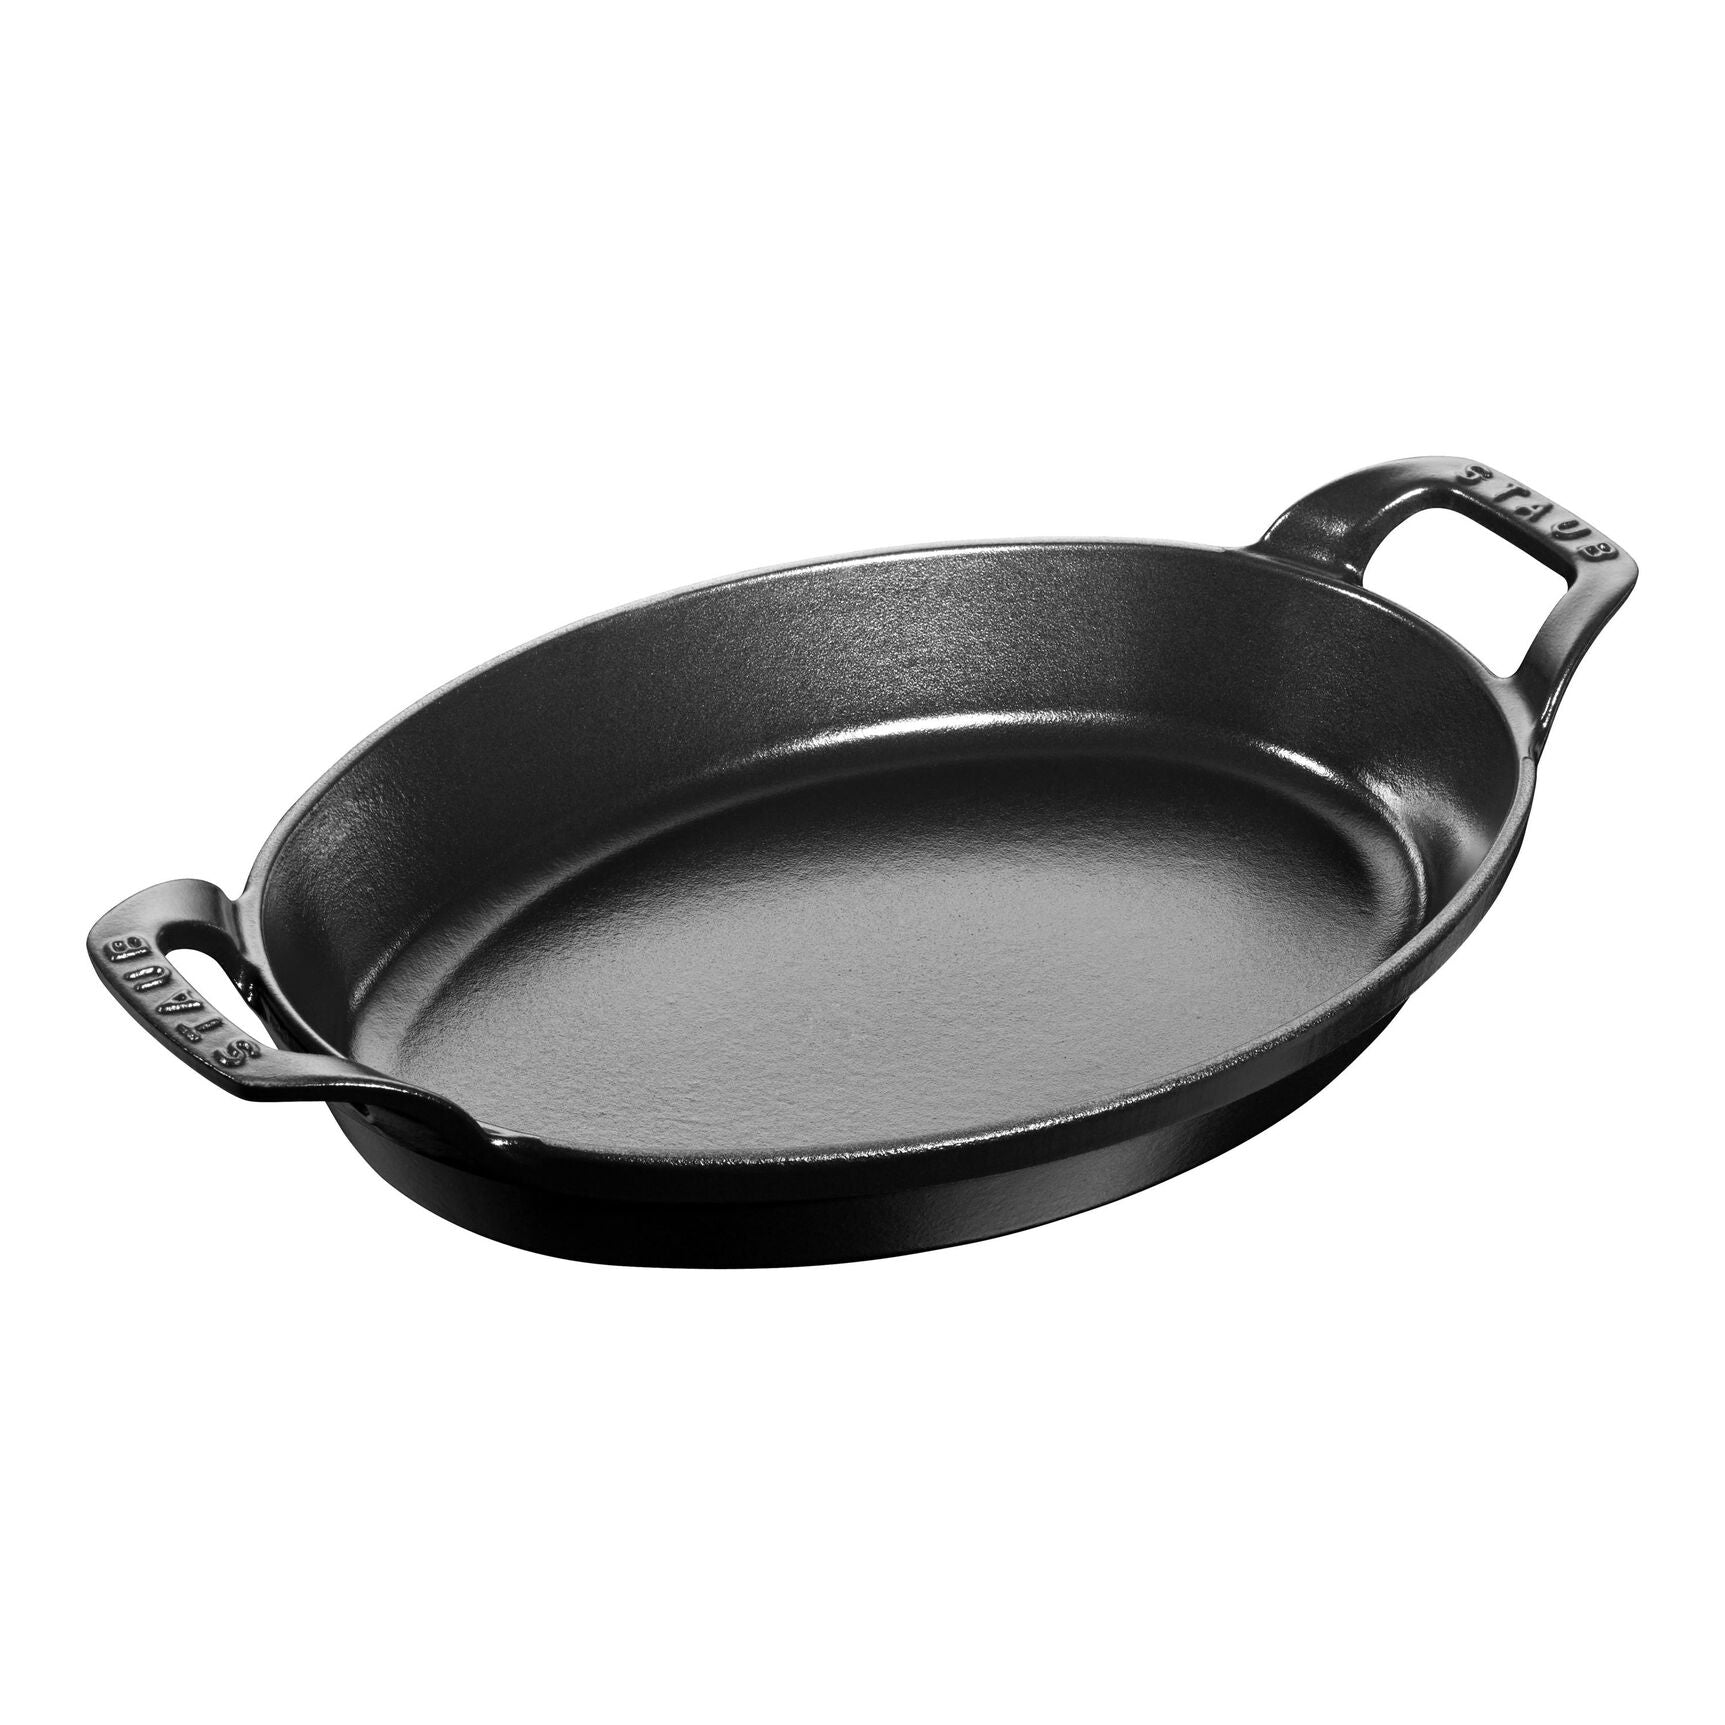 Baking dish Staub oval 28 cm, Black 40509-341-0